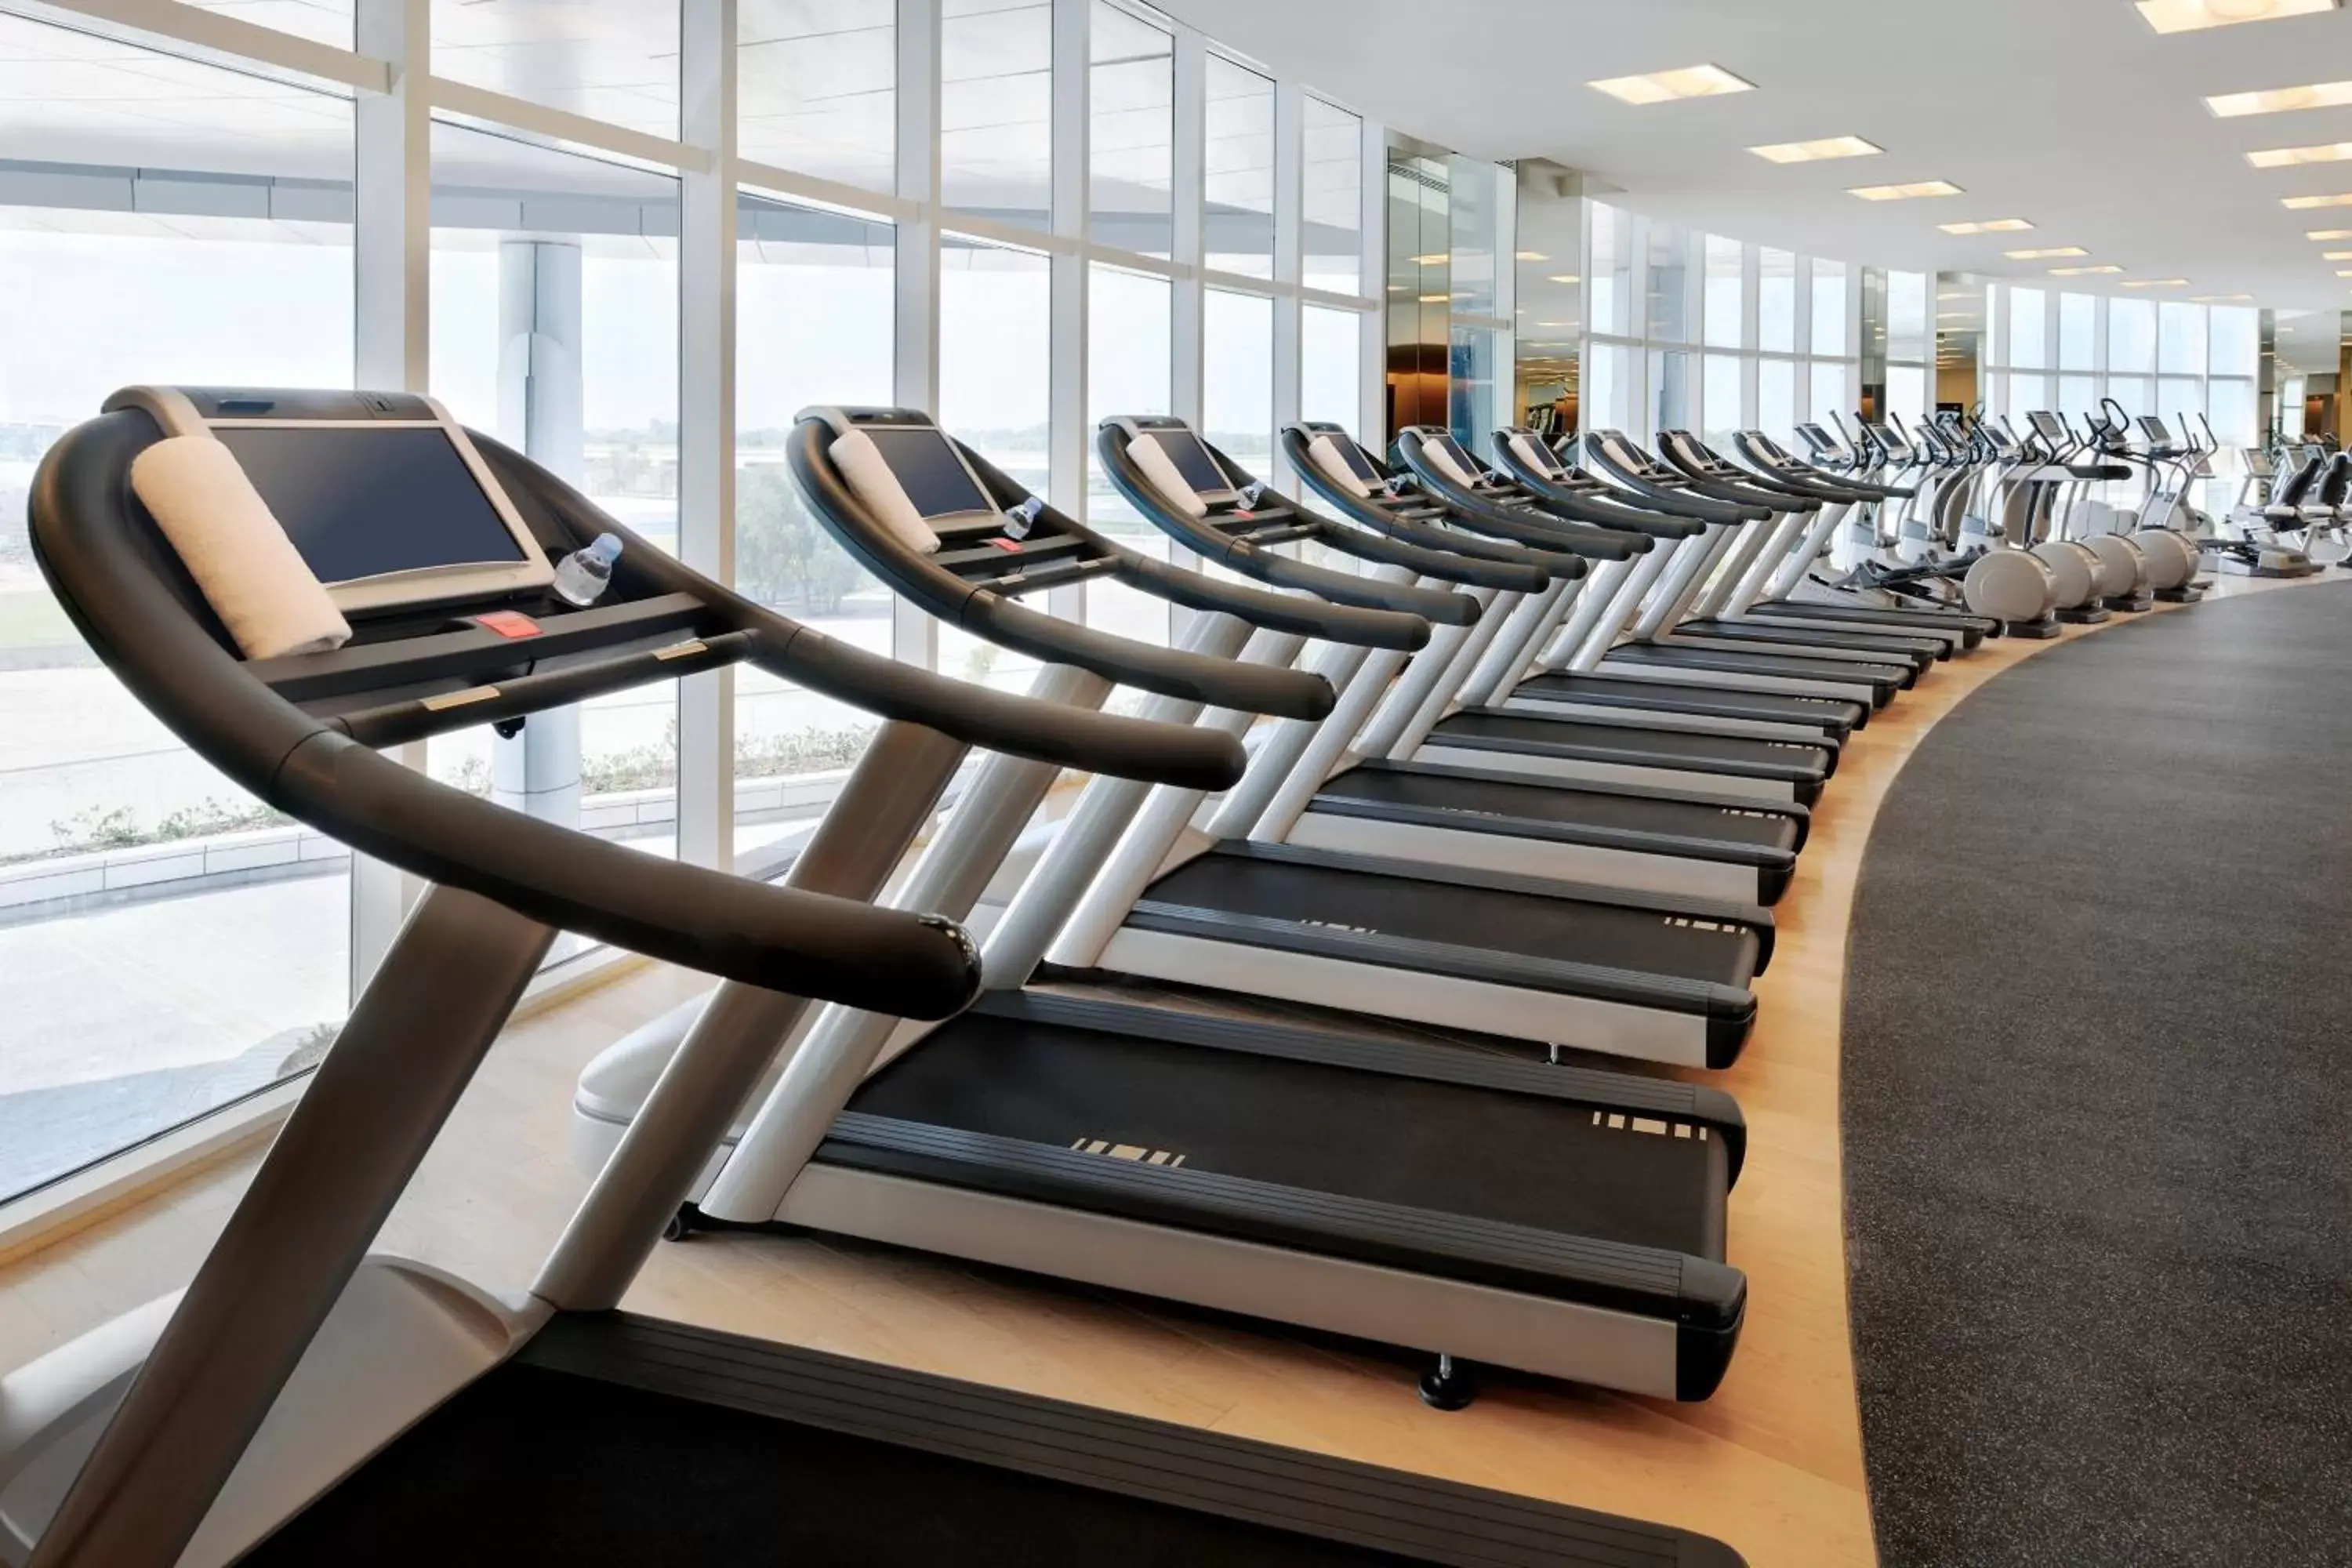 Fitness centre/facilities, Fitness Center/Facilities in JW Marriott Marquis Hotel Dubai